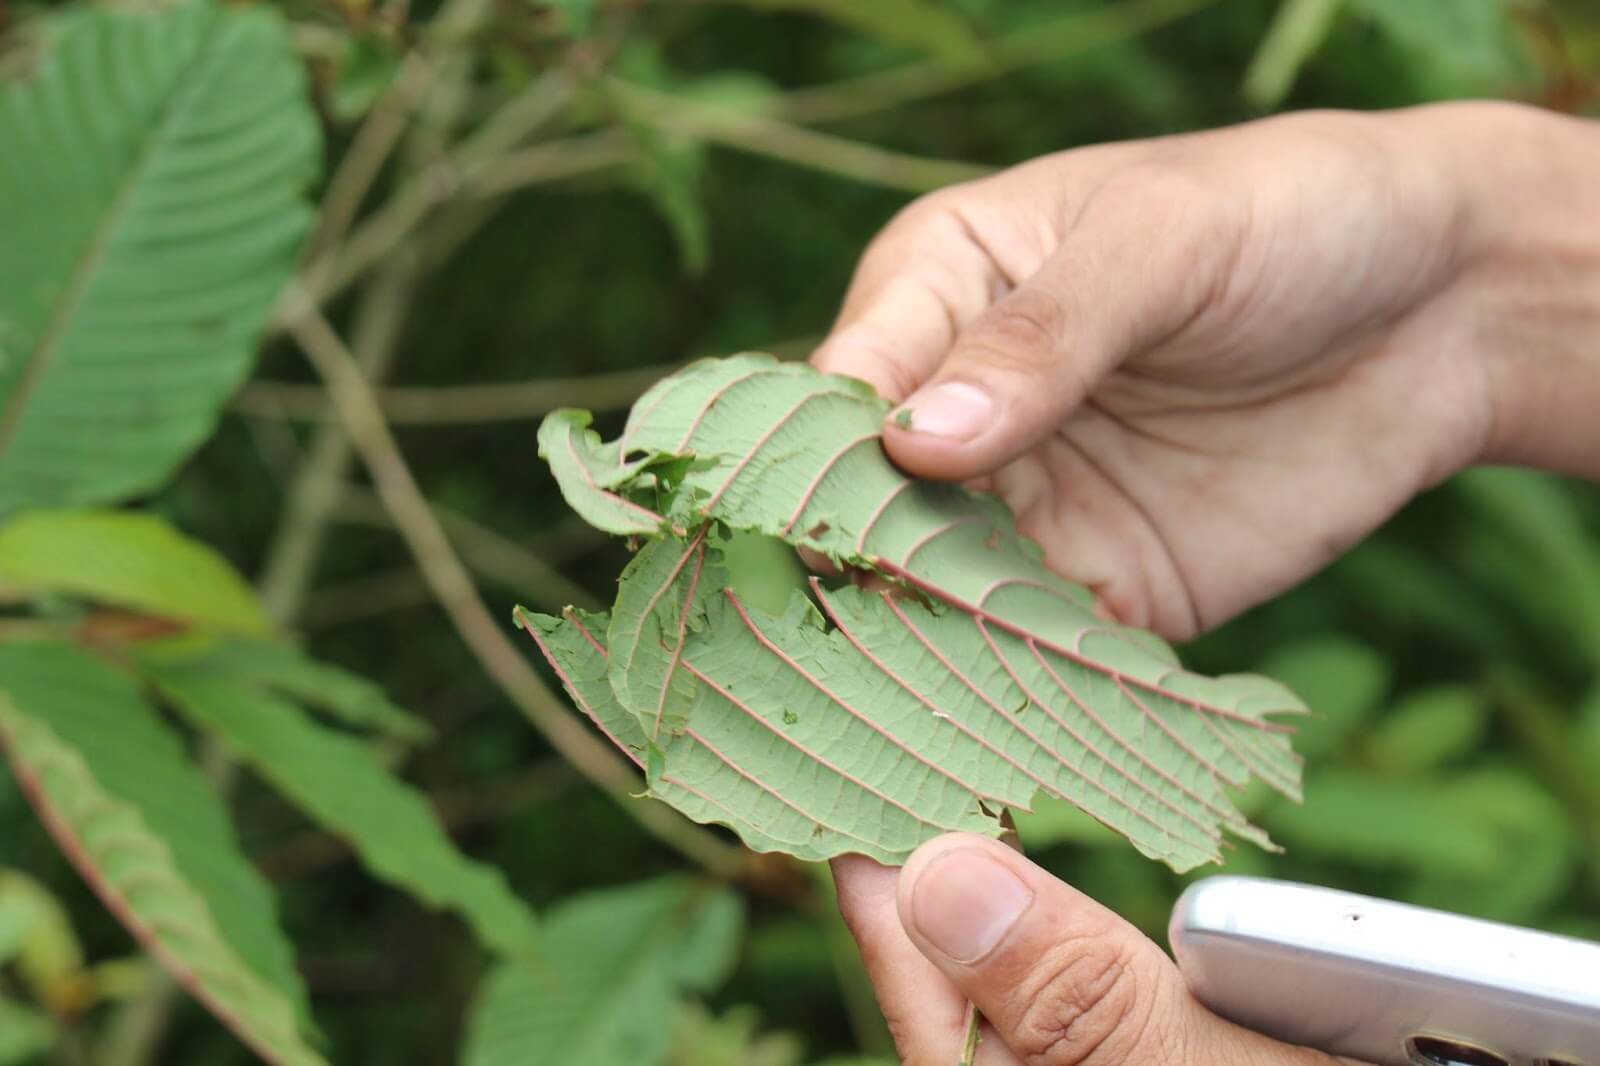 Hands holding a kratom leaf, showing the veins.